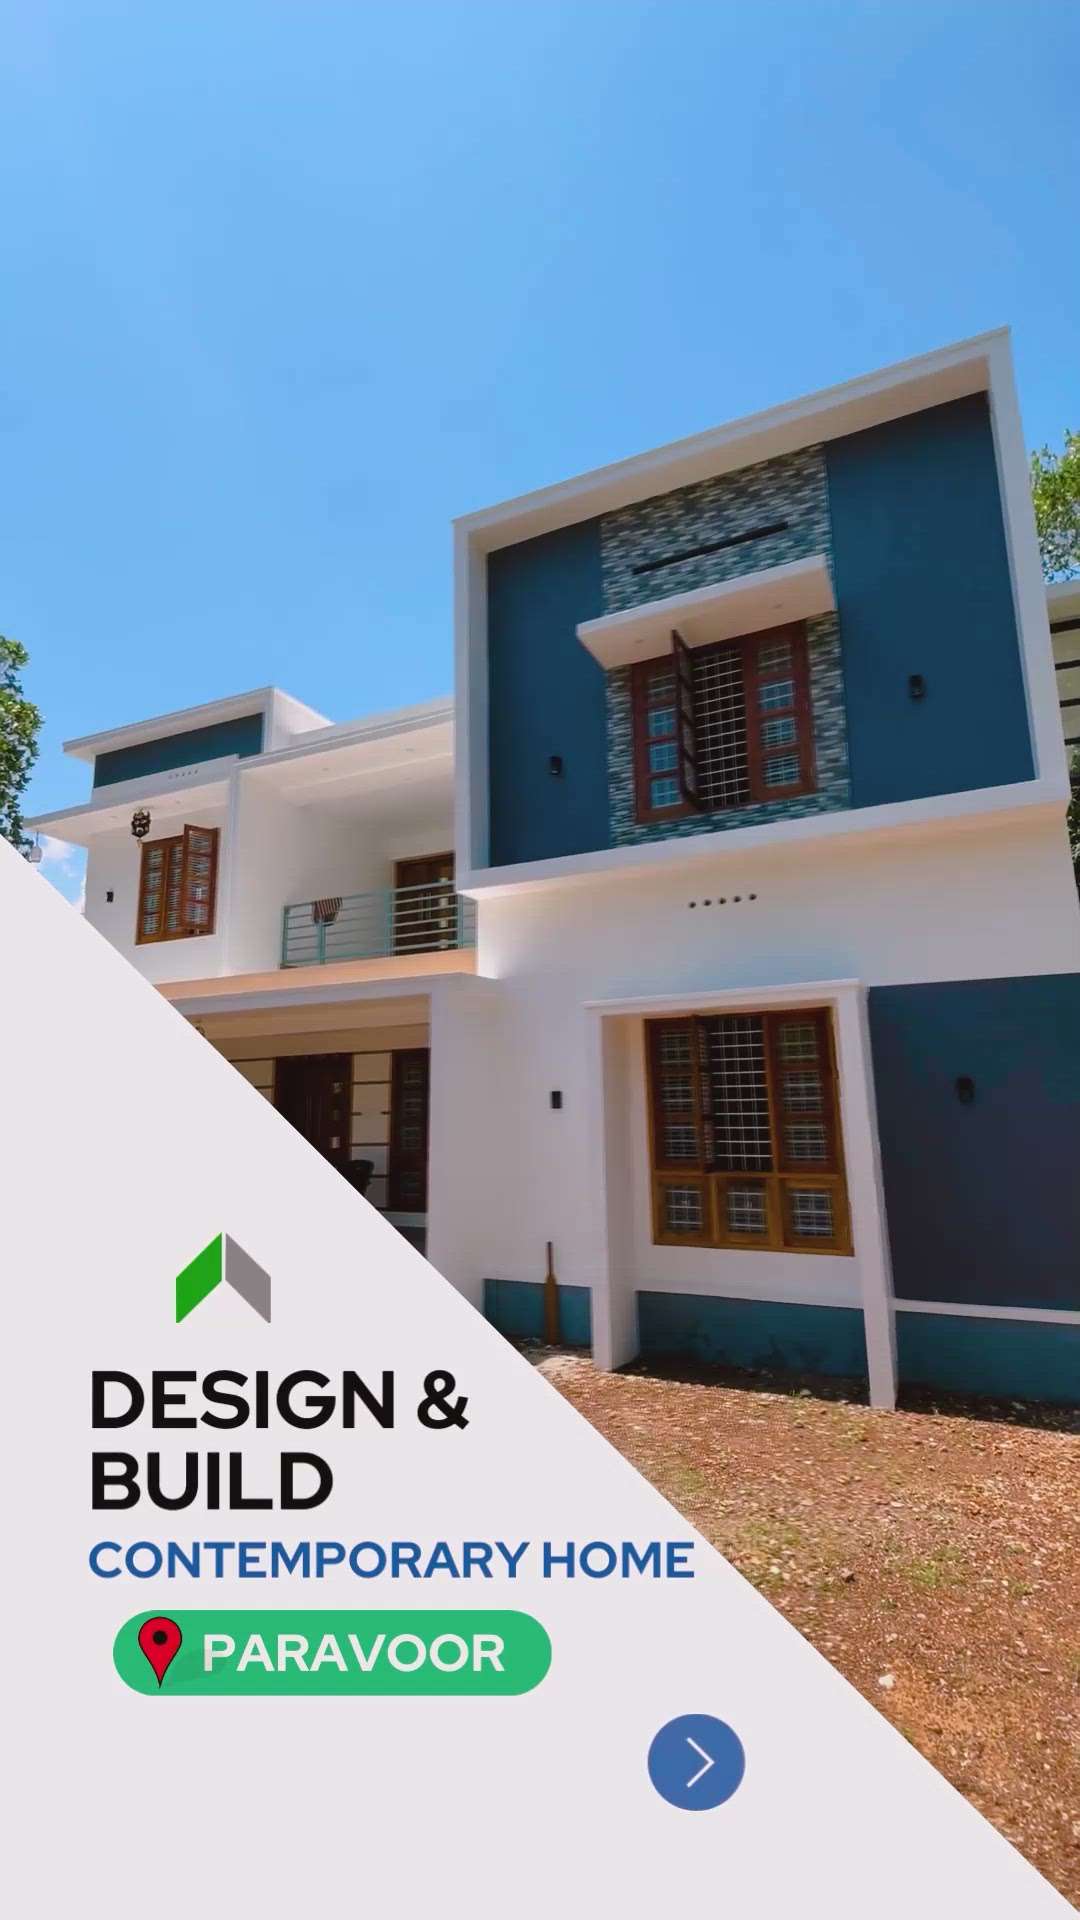 Design & Build #homeplanner #HouseDesigns